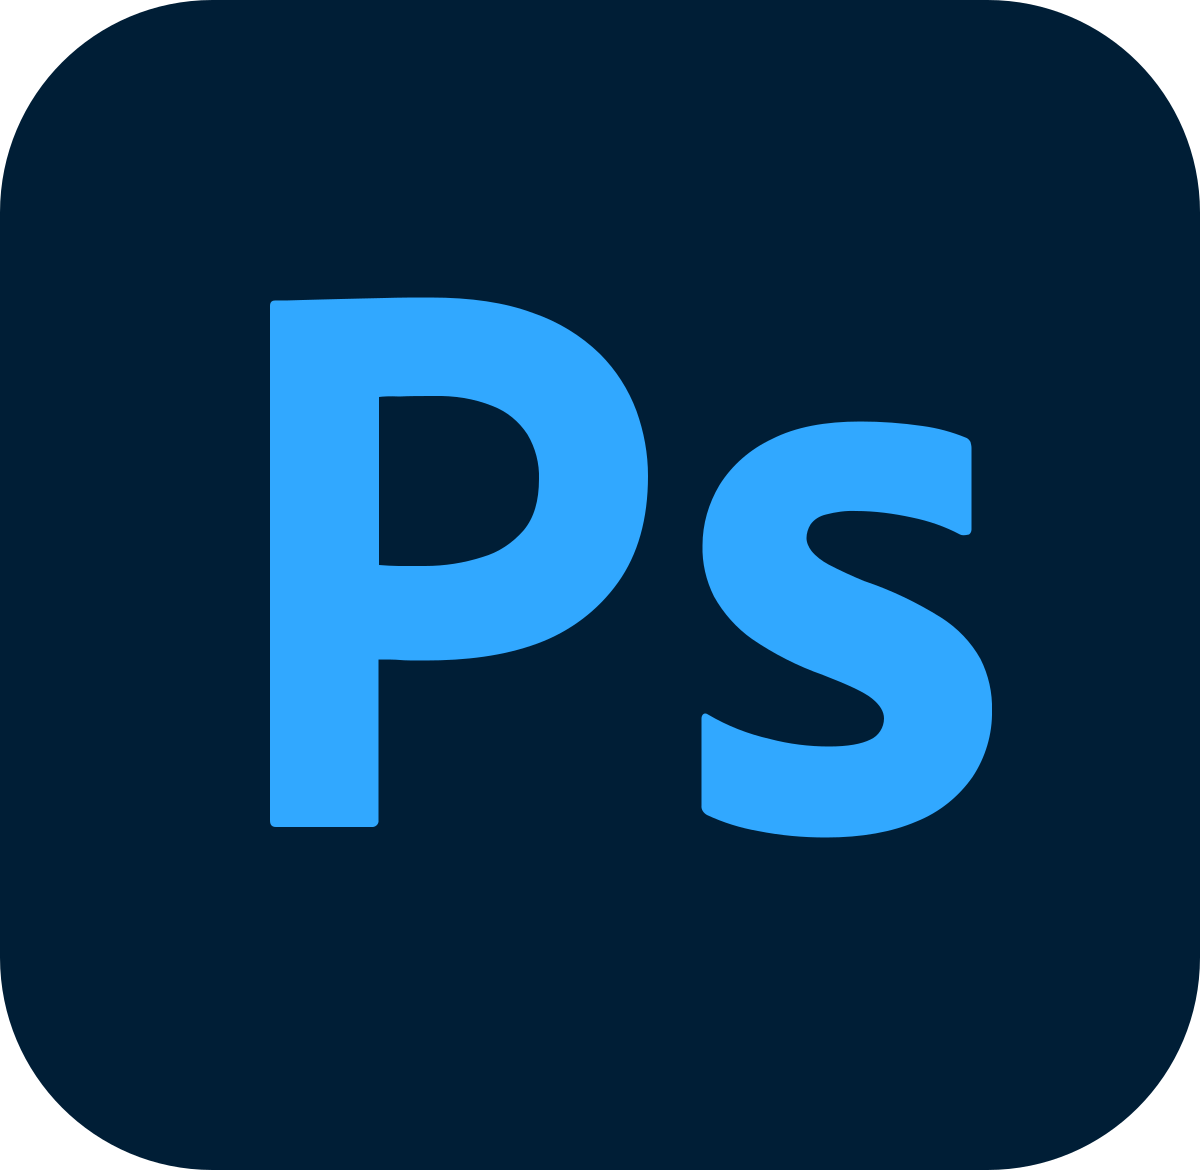 Adobe Photoshop - Wikipedia, la enciclopedia libre